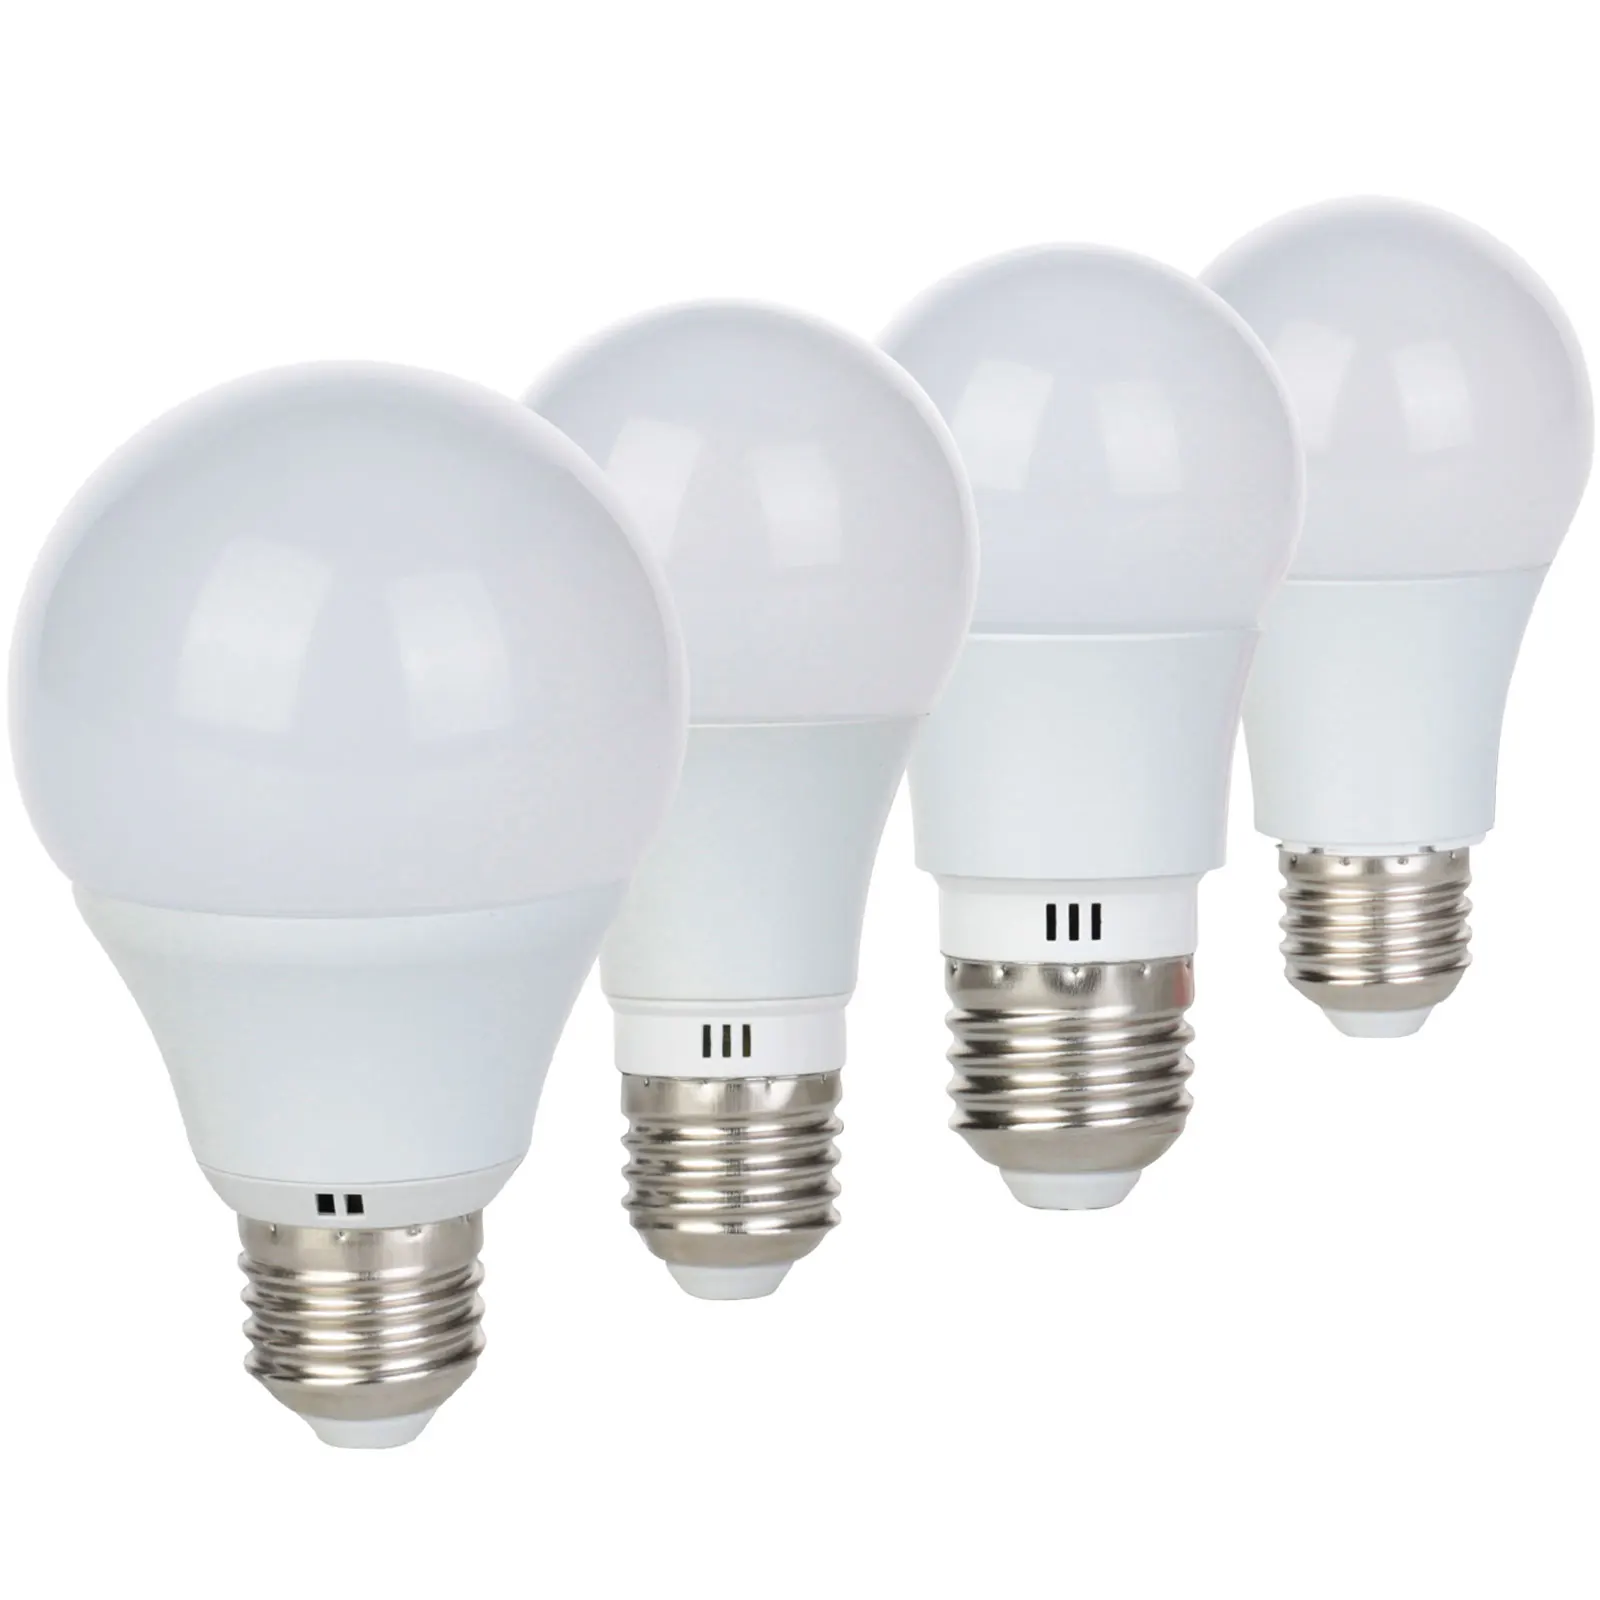 

Dimmable E27 B22 LED Bulb Lamps 3W 5W 7W 9W Lampada LED Light Bulb AC 220V-240V Bombilla Spotlight Cold/Warm White